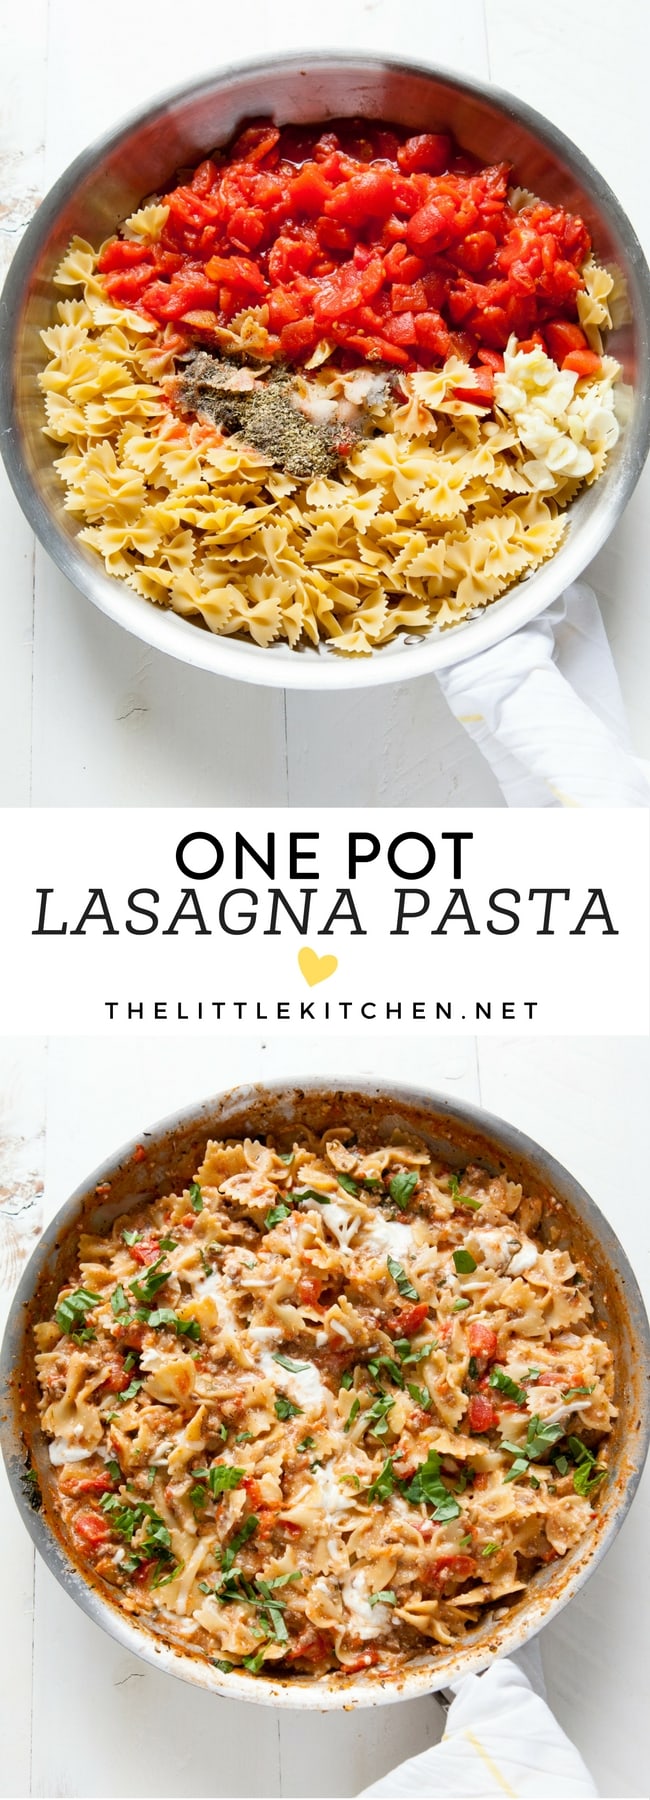 One Pot Lasagna Pasta from thelittlekitchen.net